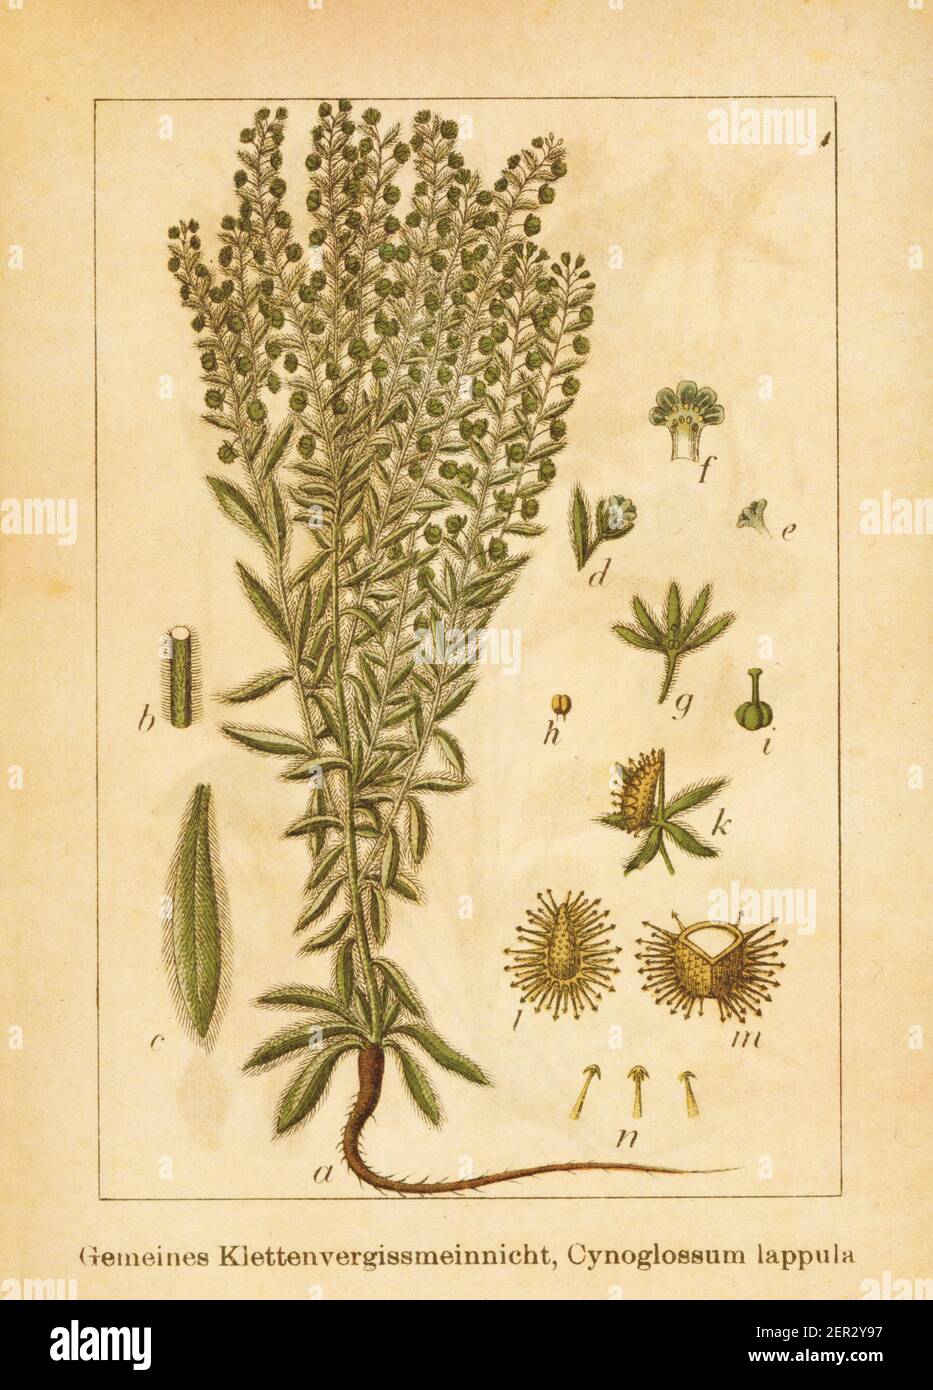 Antique illustration of a lappula squarrosa, also known as cynoglossum lappula, European stickseed, bluebur or bristly sheepbur. Engraved by Jacob Stu Stock Photo